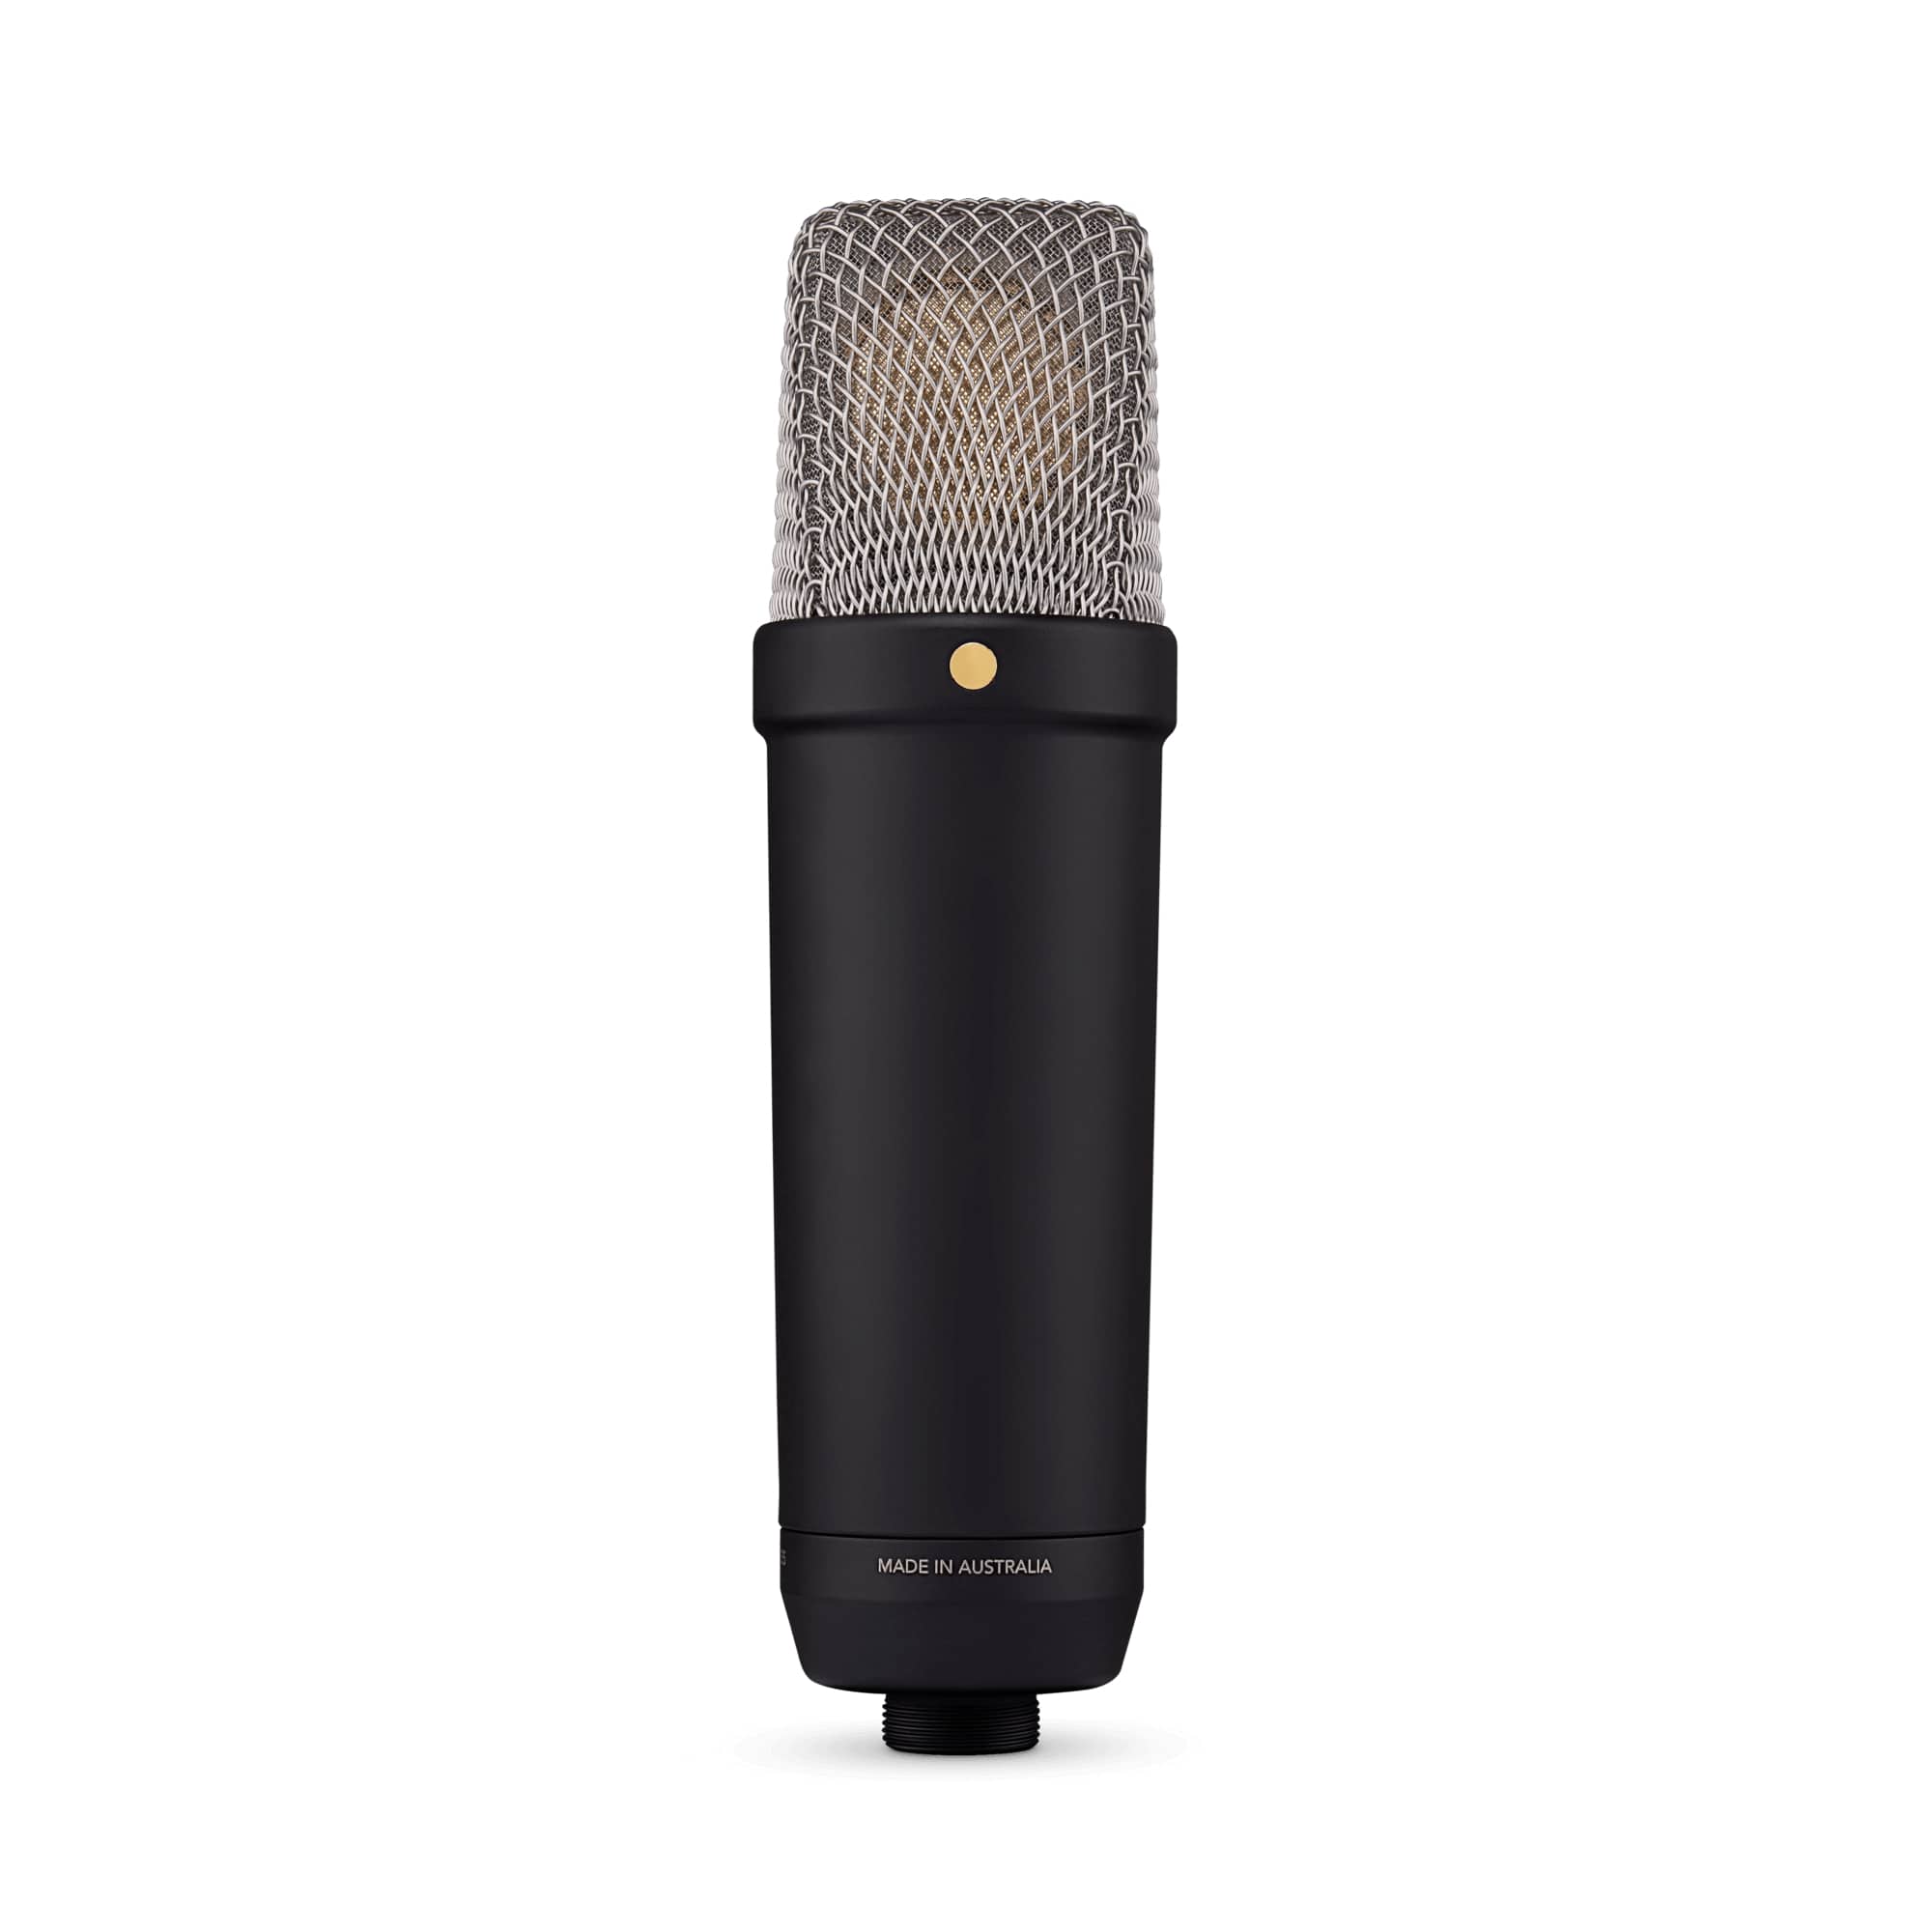 Студийные микрофоны Rode NT1 5th Generation Black студийные микрофоны neumann tlm 103 mt